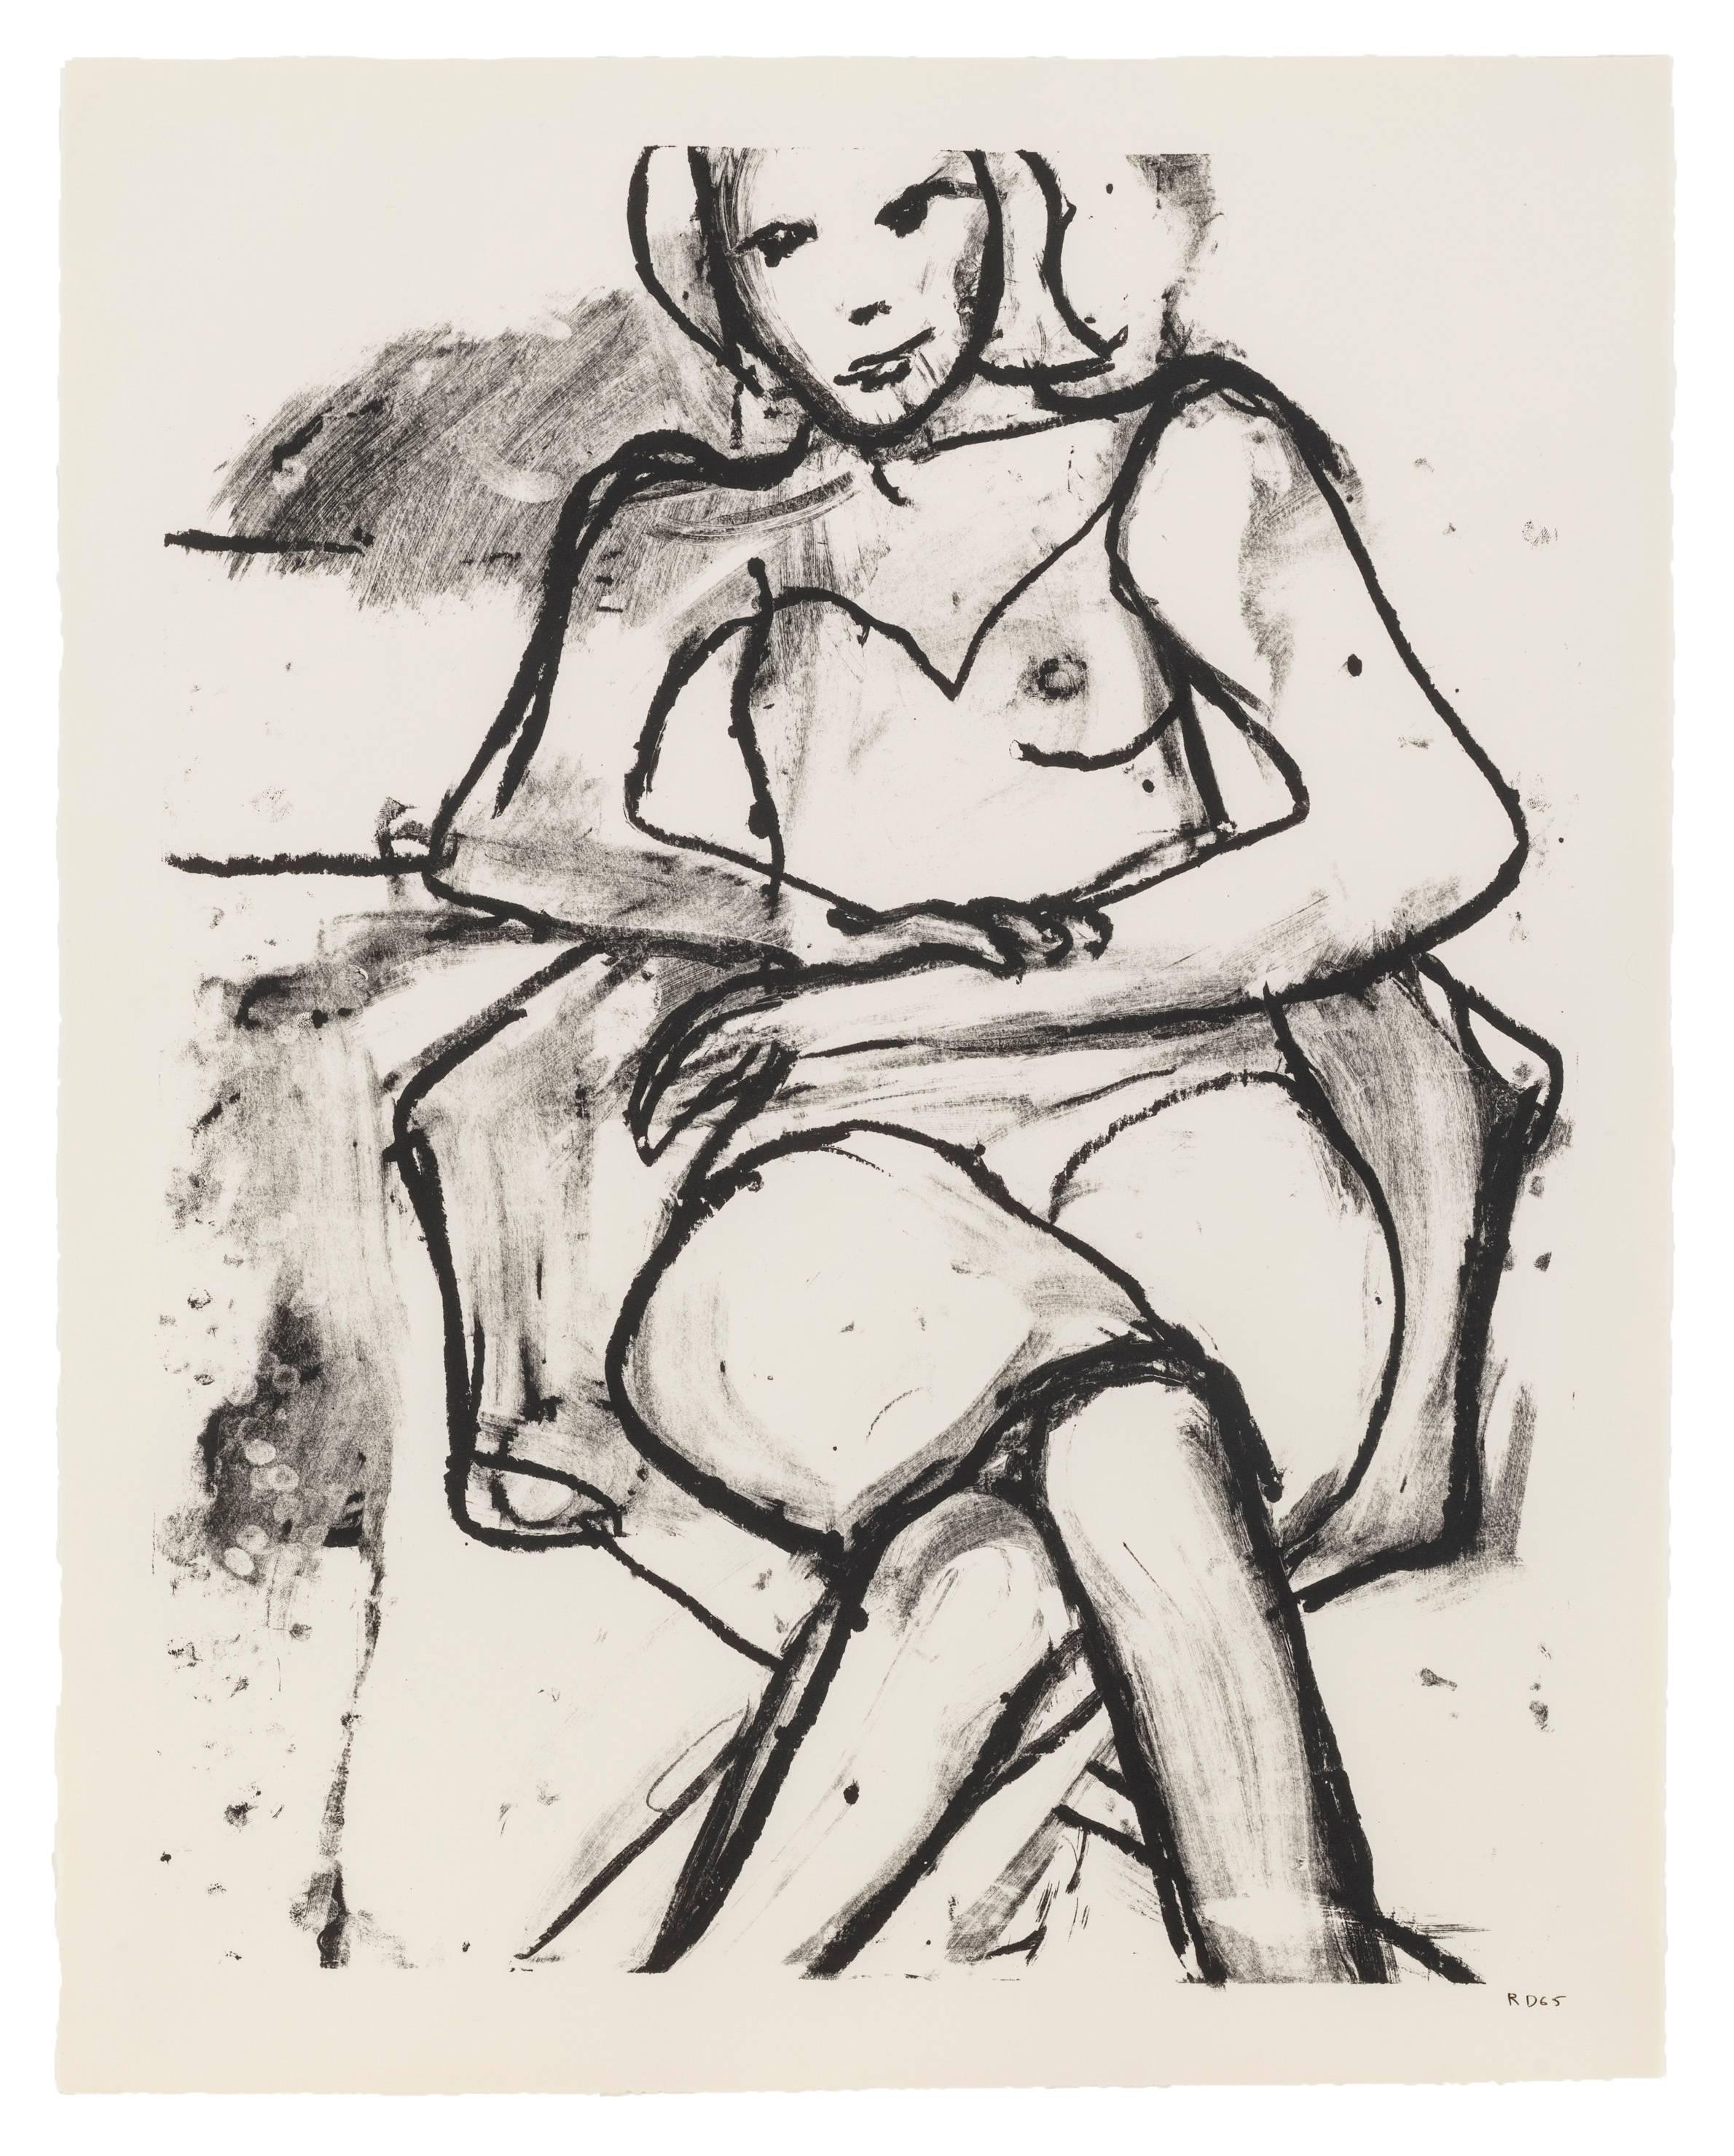 Richard Diebenkorn Portrait Print - Seated Woman with Hands Crossed